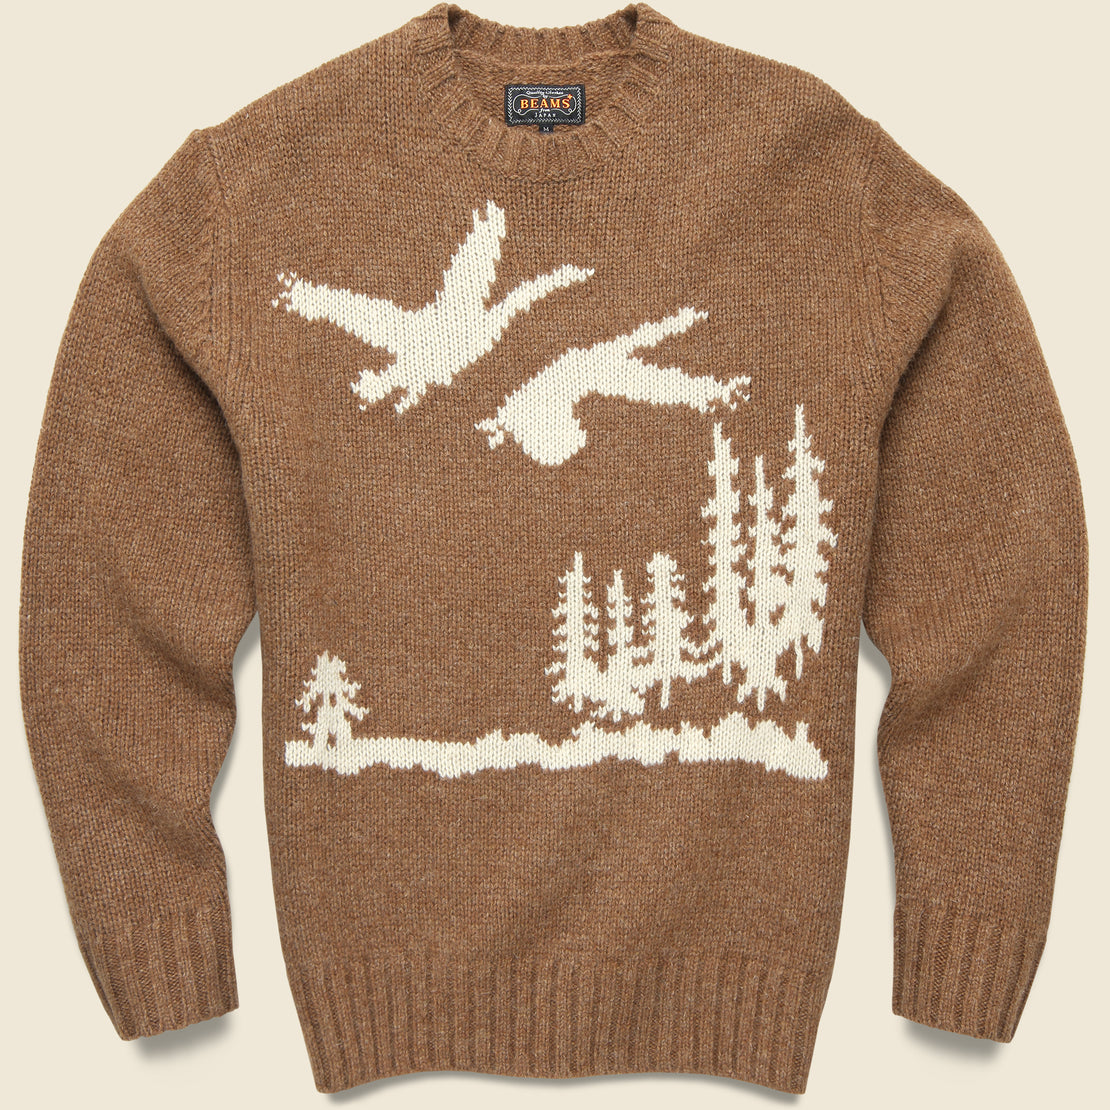 BEAMS+ Intarsia 3G Crewneck Ducks Sweater - Brown